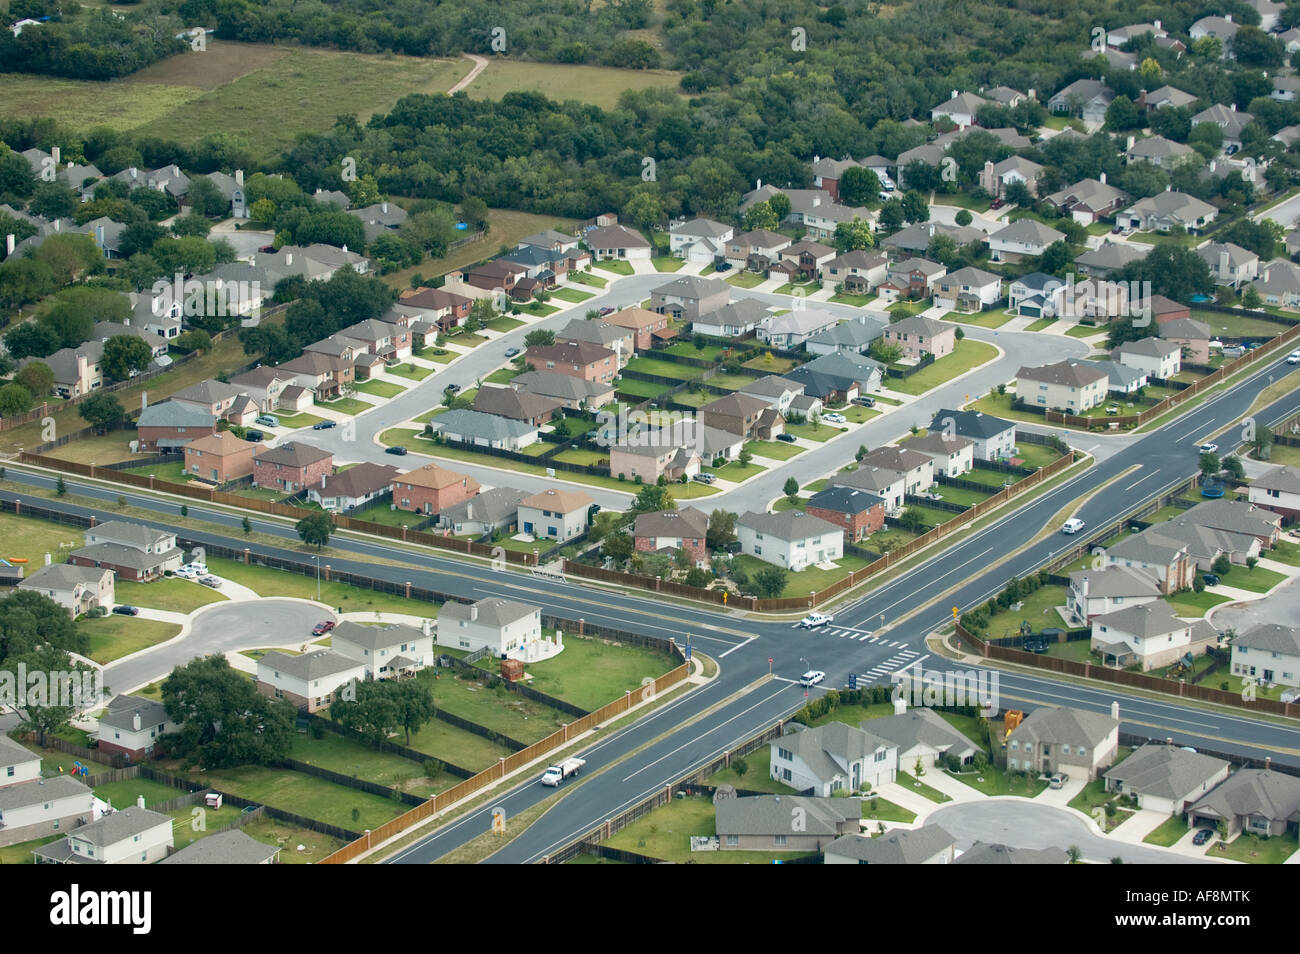 Aerial View of a Housing Development in San Antonio, Texas. Stock Photo